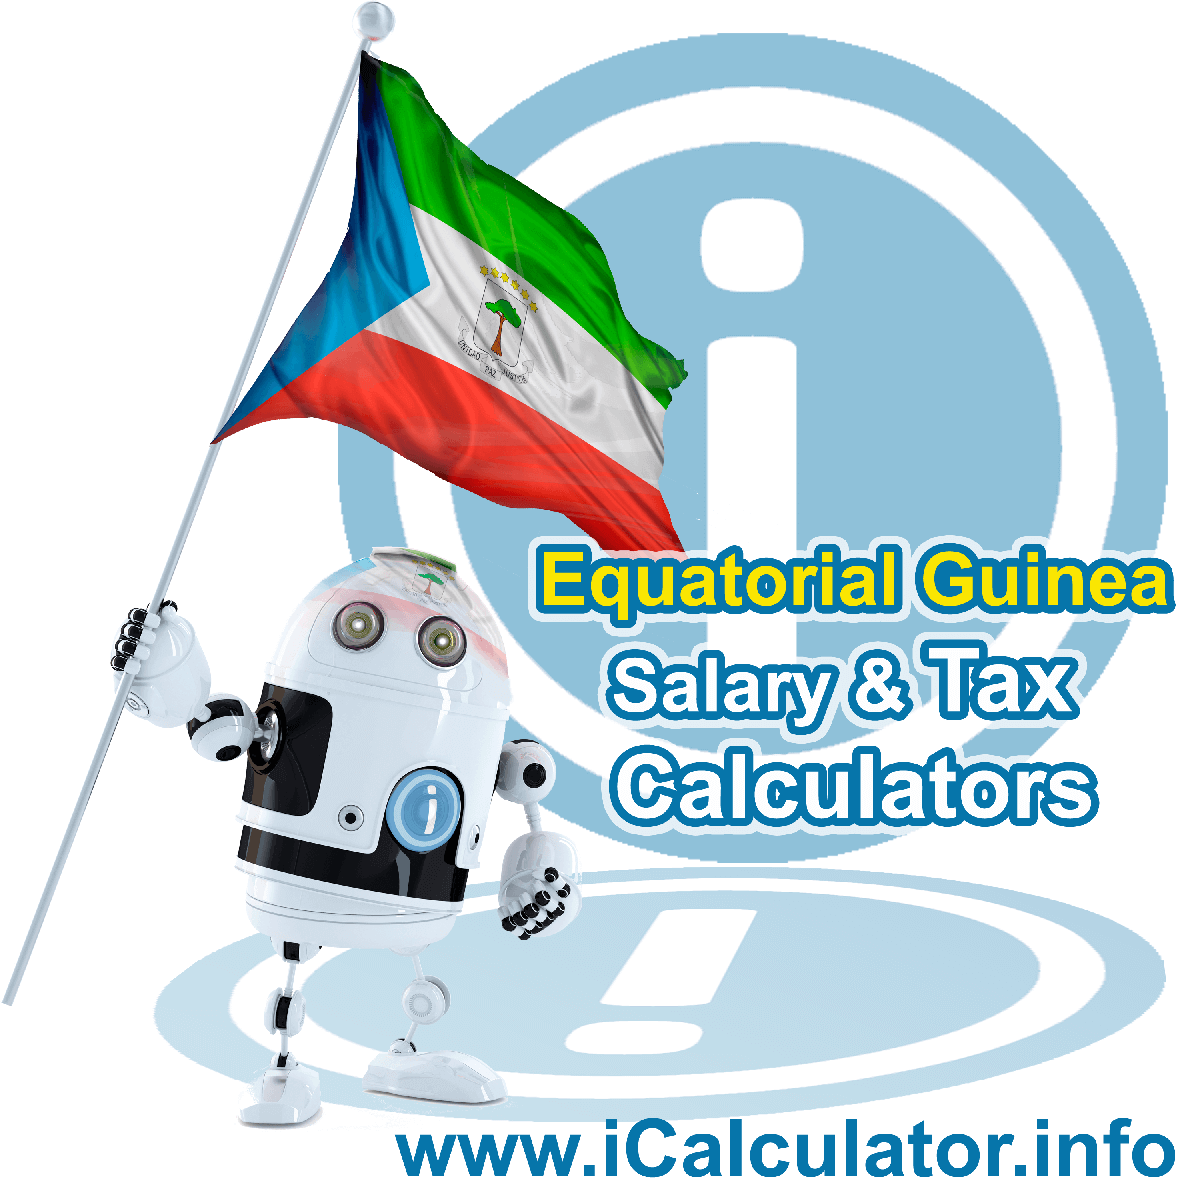 Equatorial Guinea Tax Calculator. This image shows the Equatorial Guinea flag and information relating to the tax formula for the Equatorial Guinea Salary Calculator